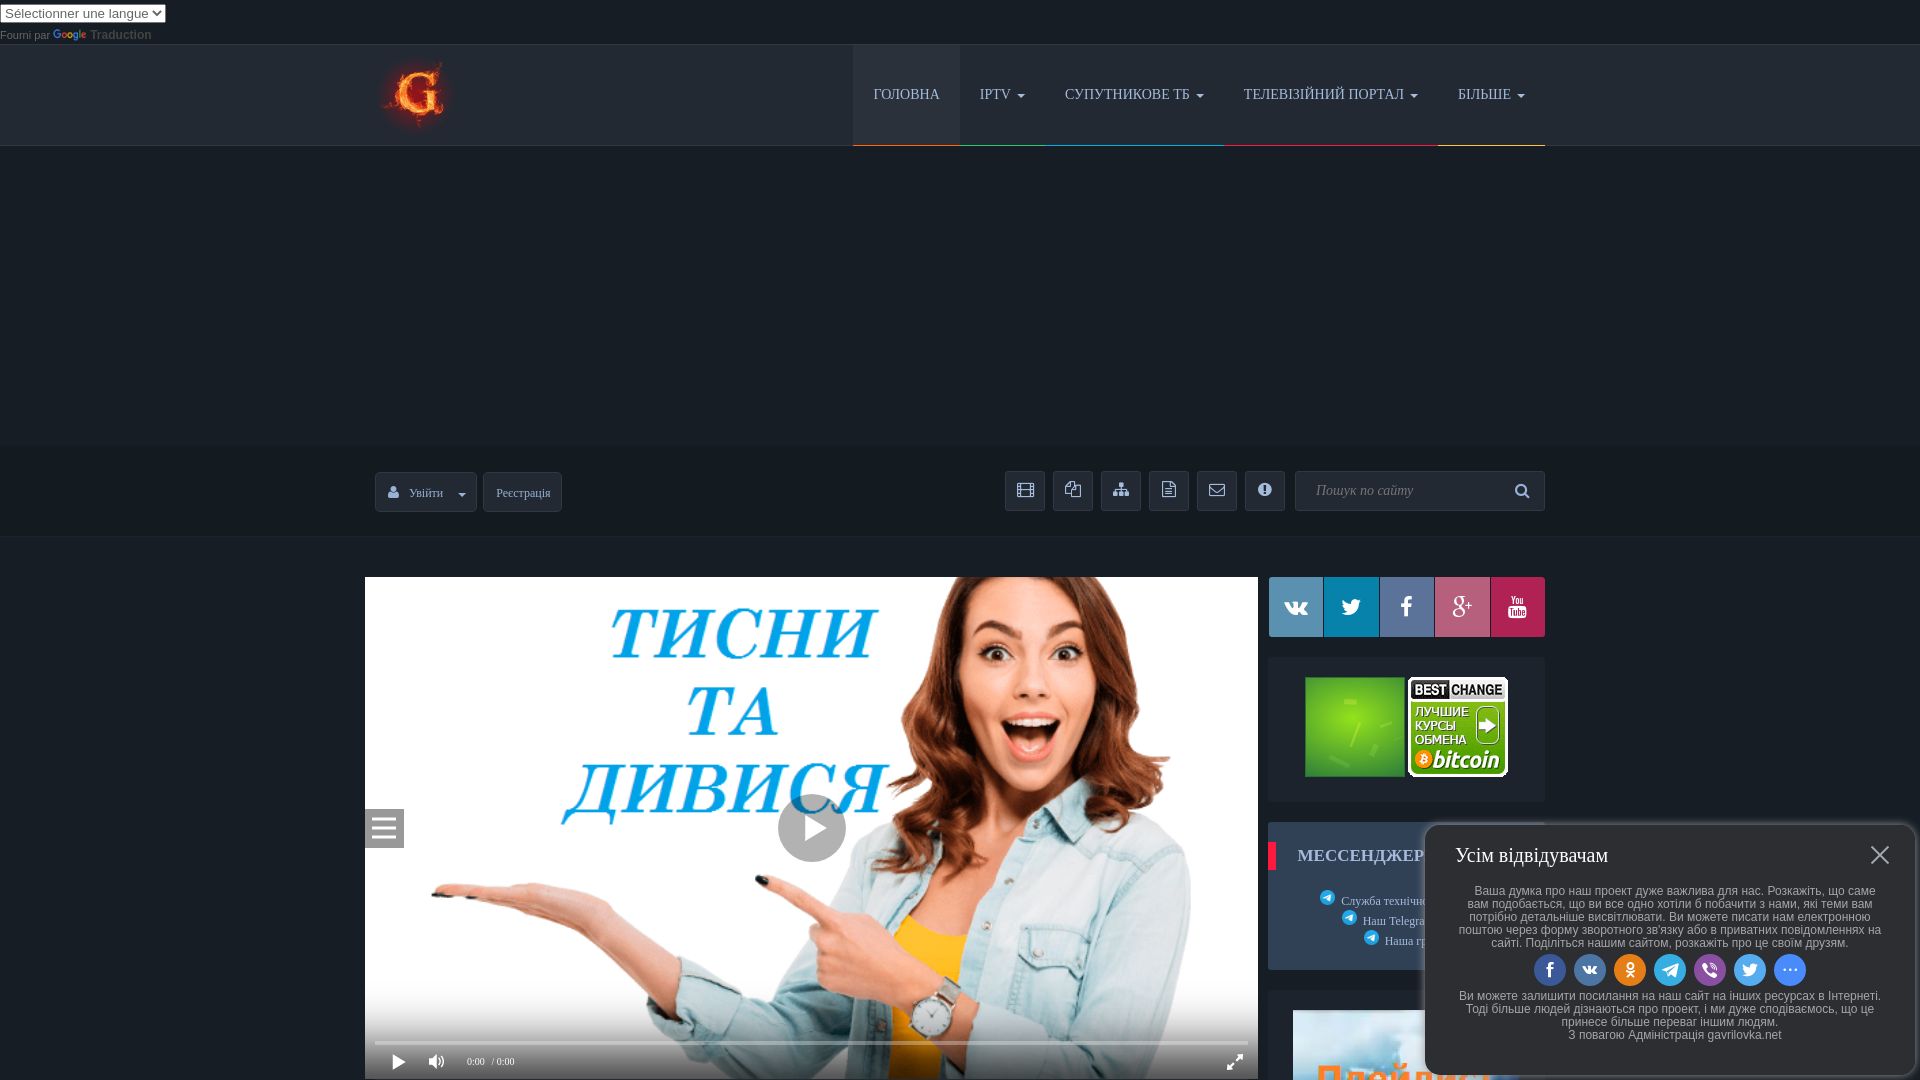 Status do site gavrilovka.net está   ONLINE